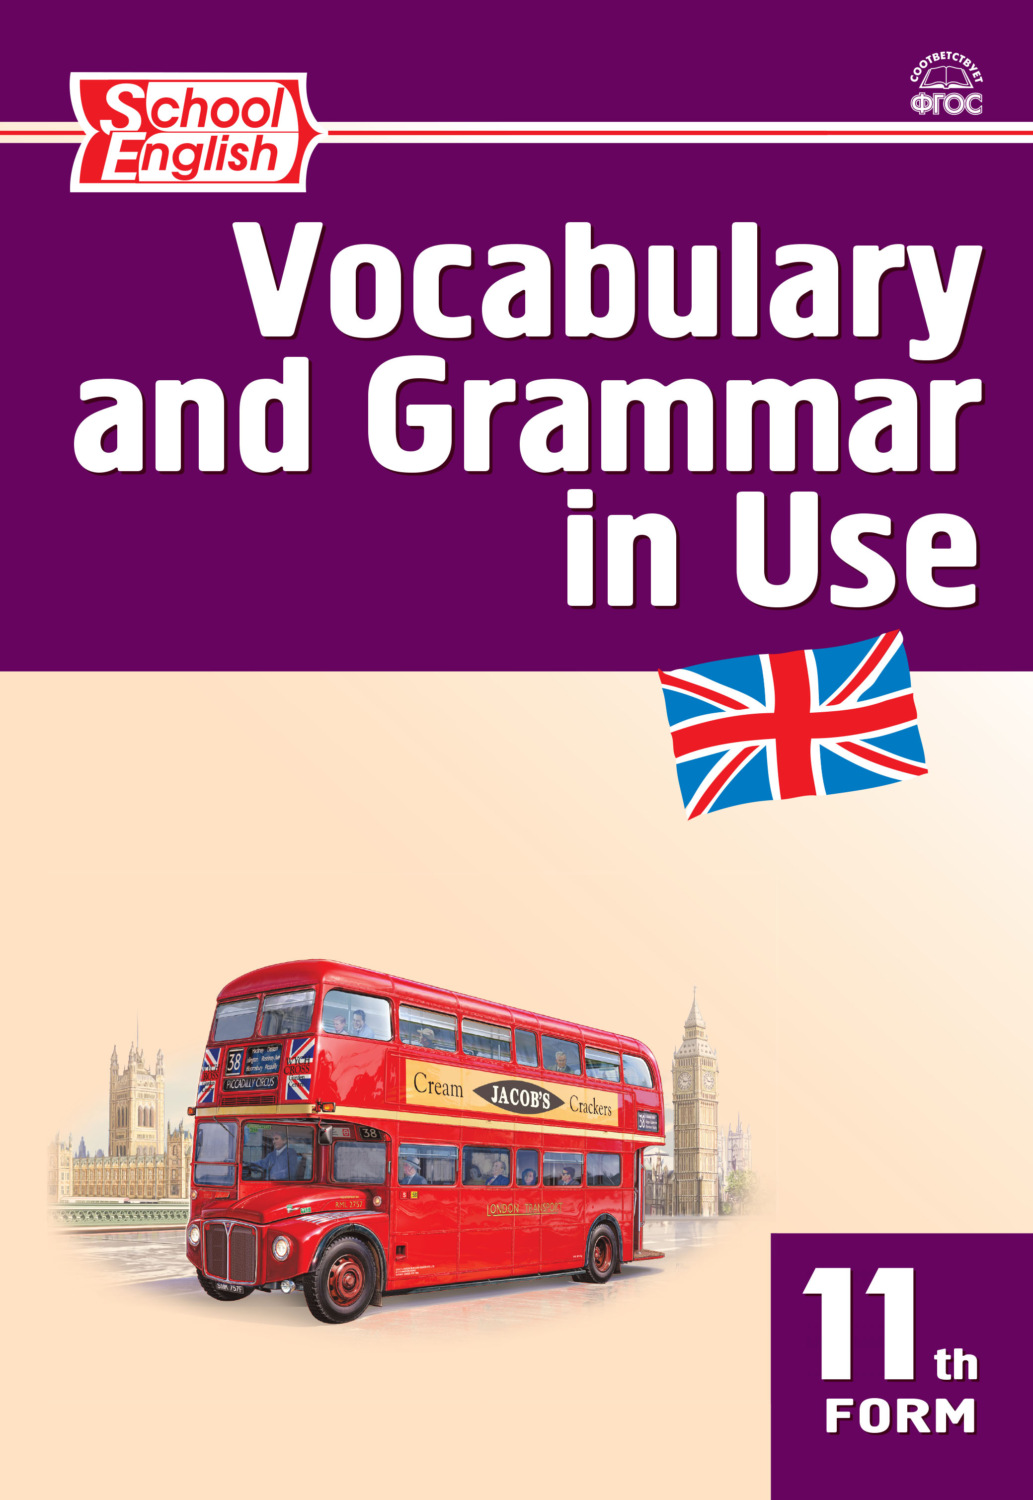 Английский 7 класс english in use. Vocabulary and Grammar in use. Вако английский язык. Английский язык ФГОС сборник. English Grammar and Vocabulary.